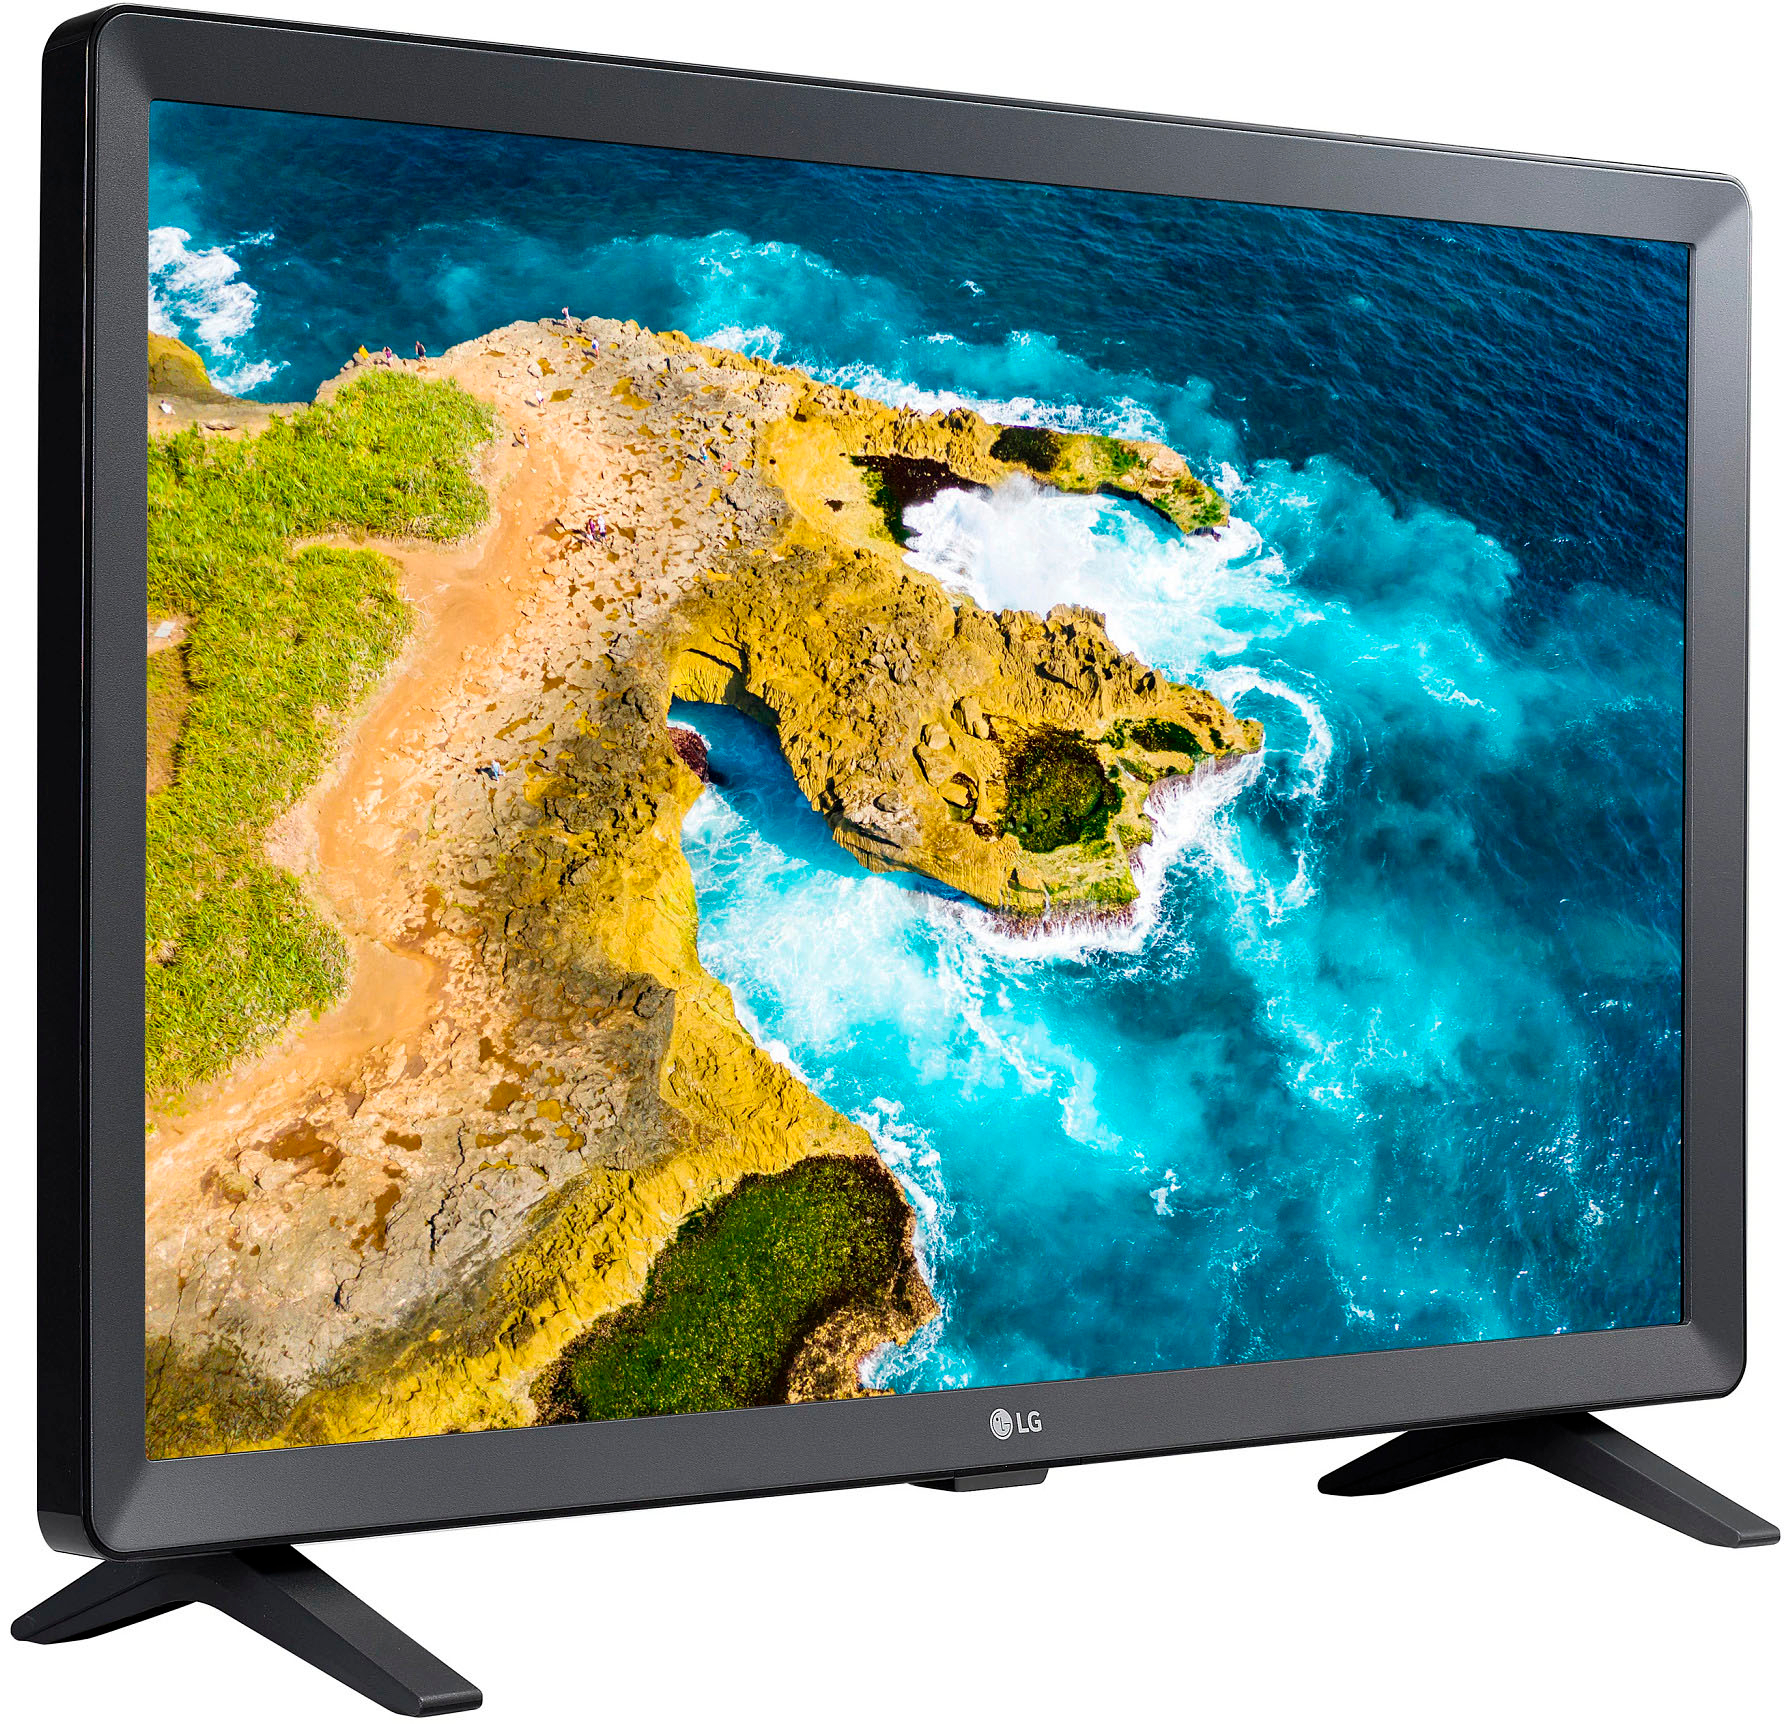 LG 24 720p HD Smart TV/Computer Monitor - 24LM530S-PU